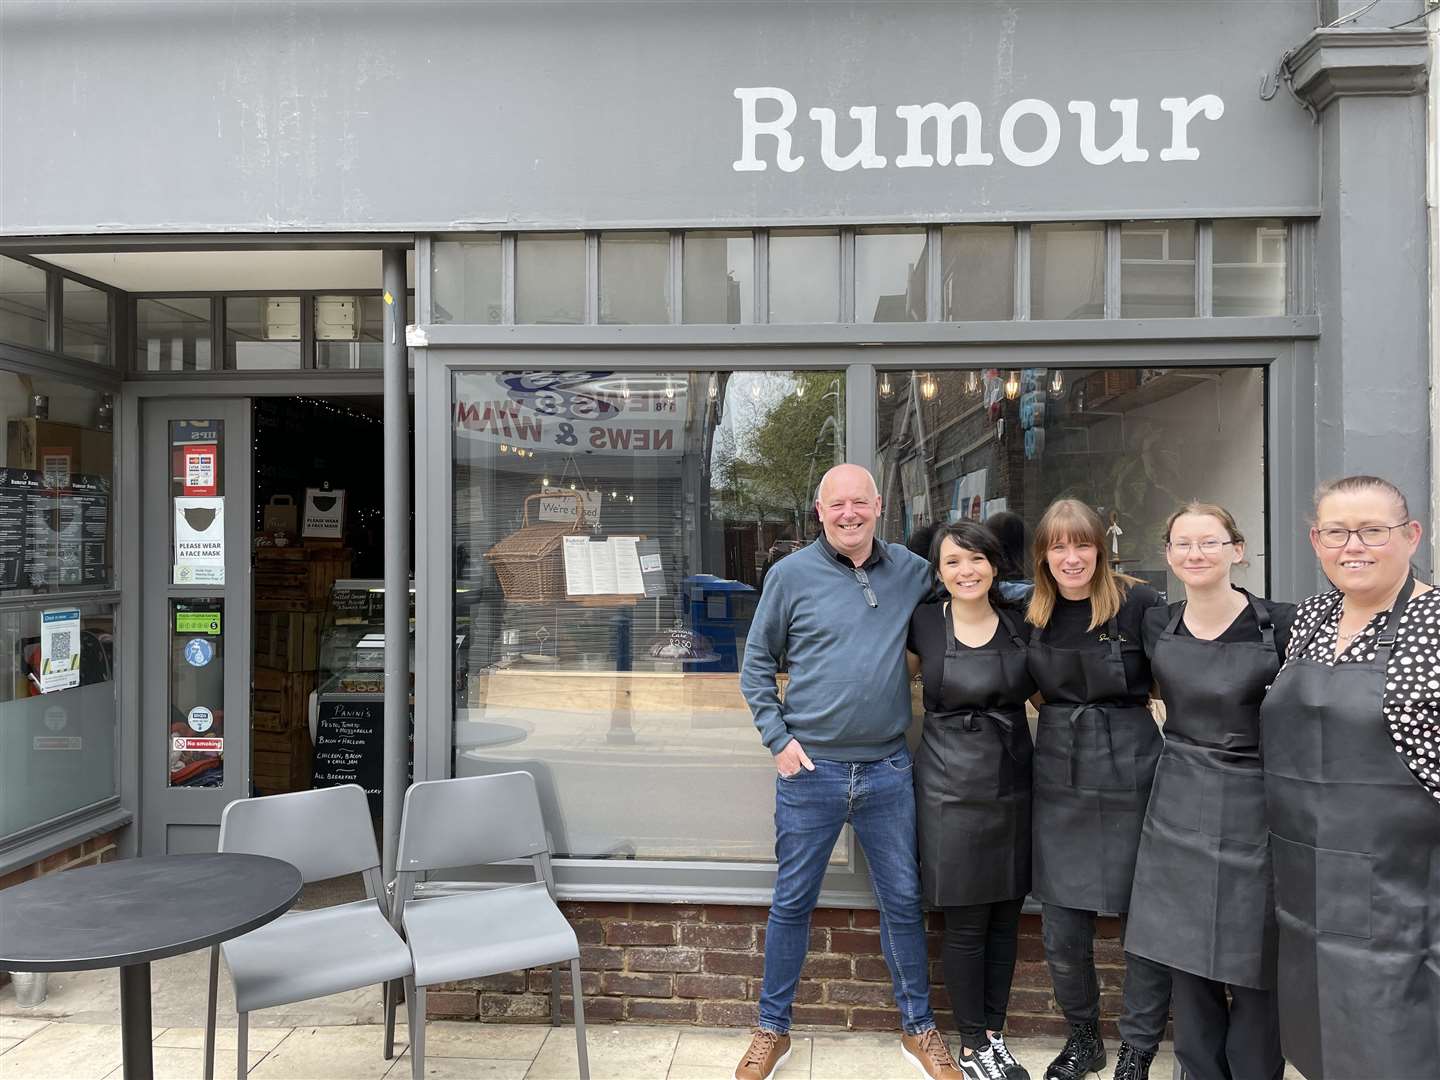 Paul West, owner of Rumour in Sheerness High Street, with Ashleigh Regan, Dawn Grain, Louisa Ingleton and Kerry McKinnon